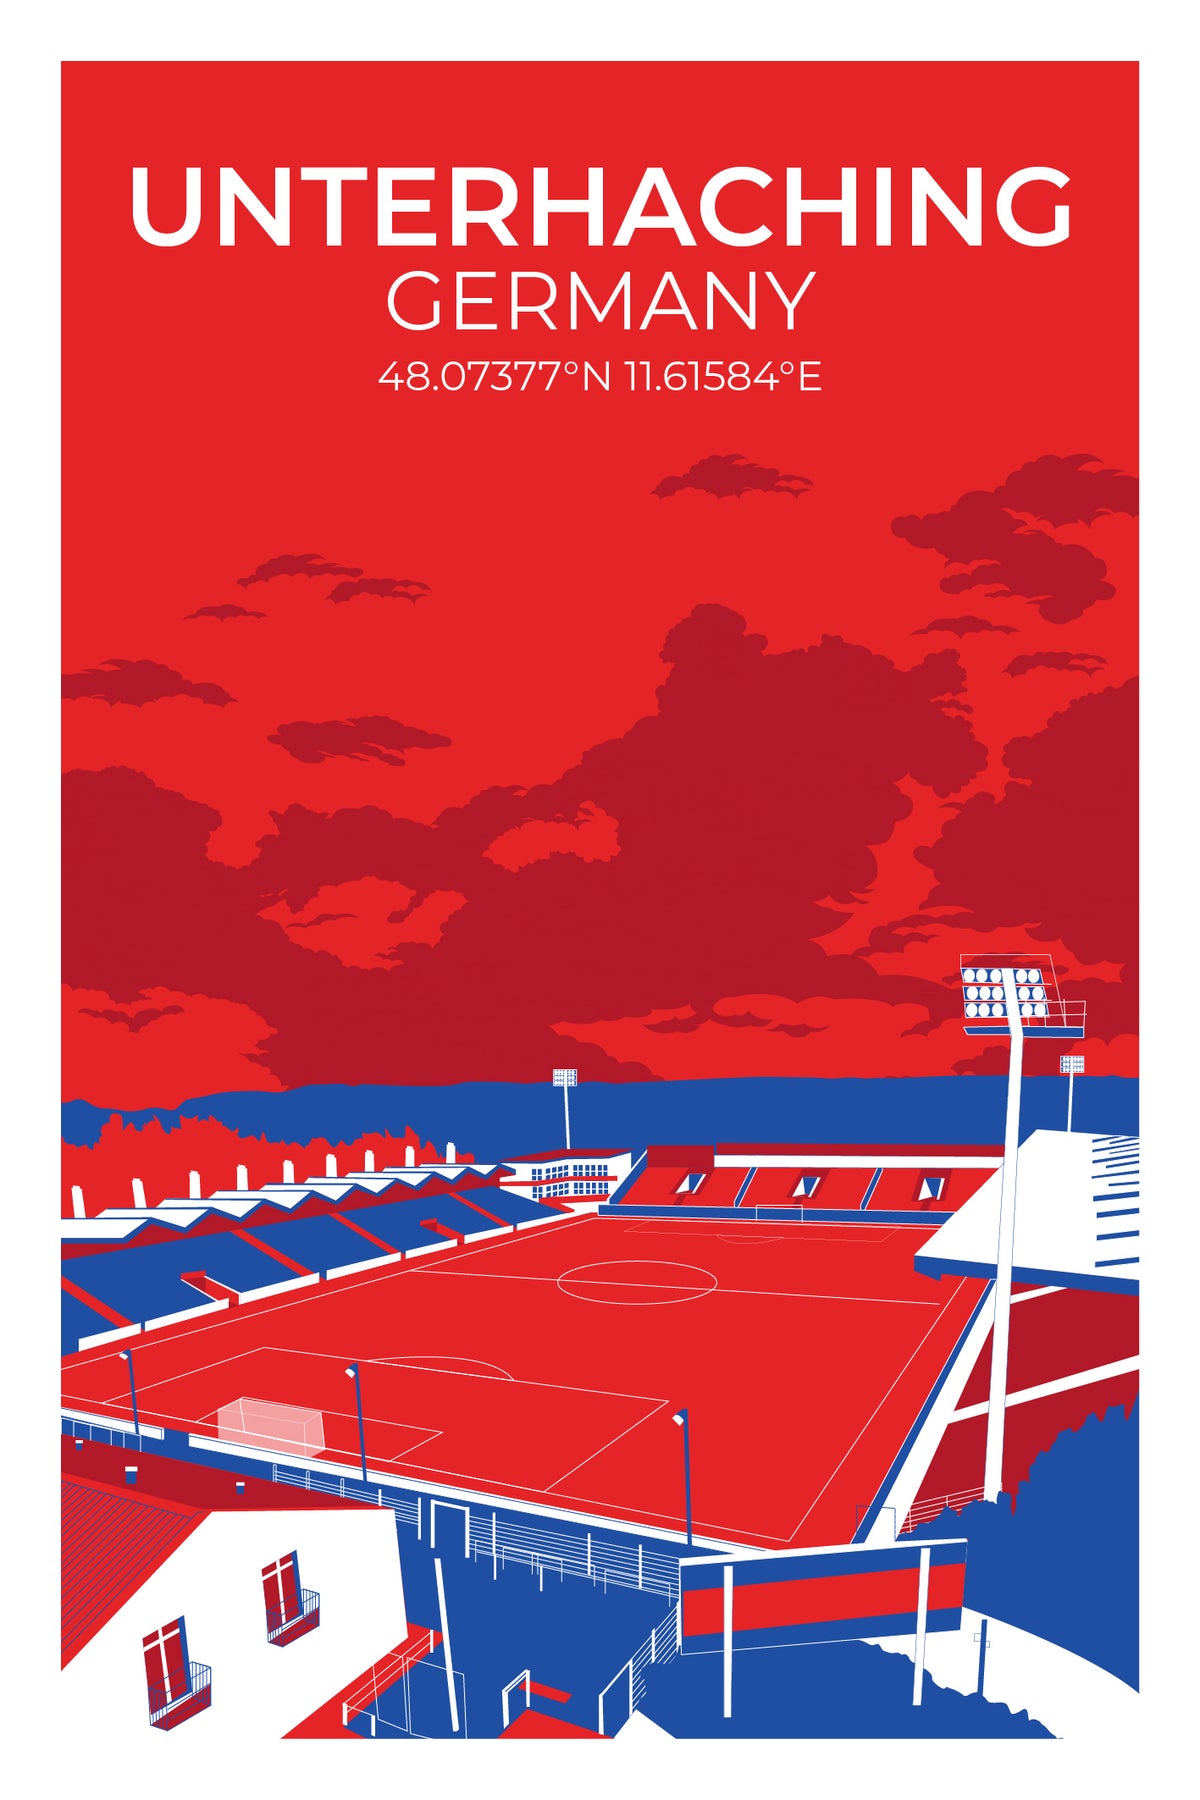 Stadion Illustration Poster Unterhaching